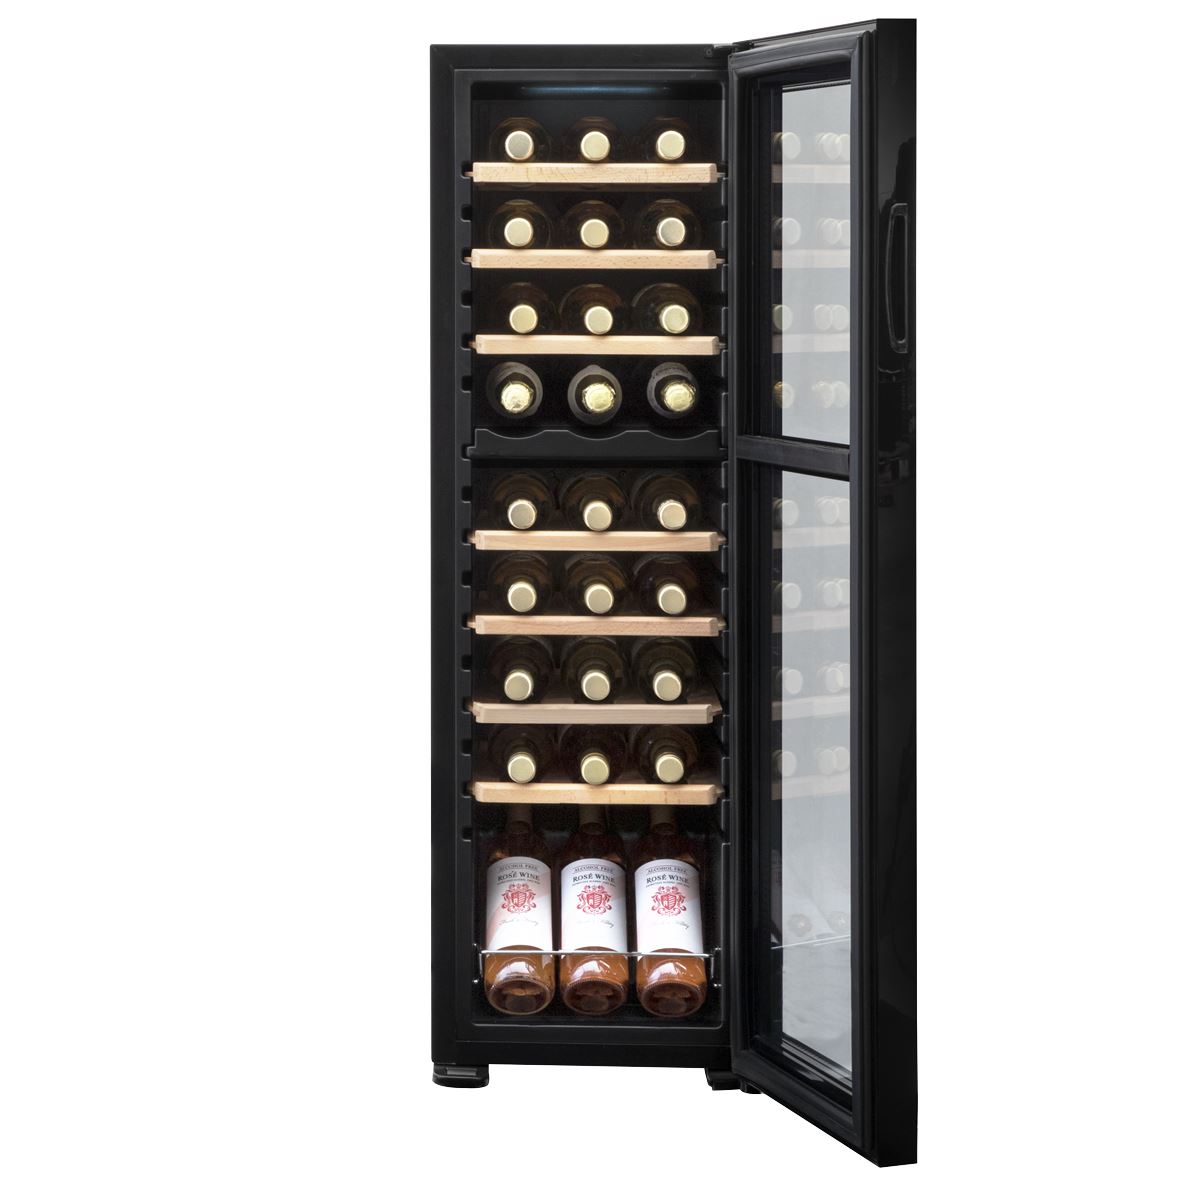 Baridi 27 Bottle Dual Zone Wine Cooler, Fridge with Digital Touchscreen Controls, Wooden Shelves & LED Light, Black